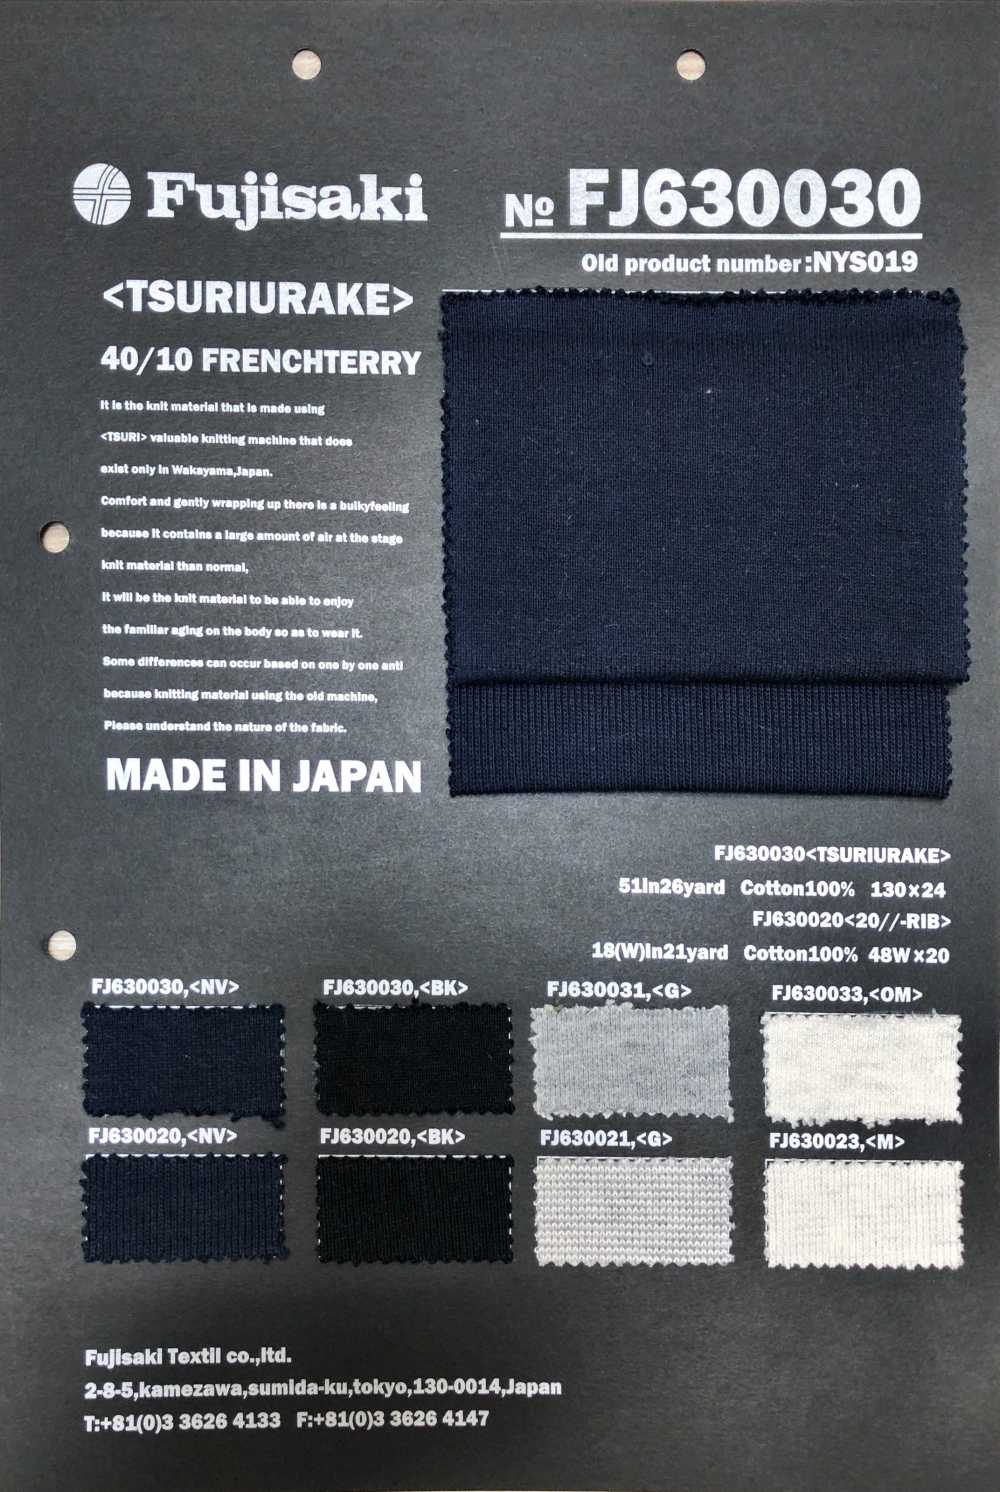 FJ630020 20//-针织罗纹[面料] Fujisaki Textile